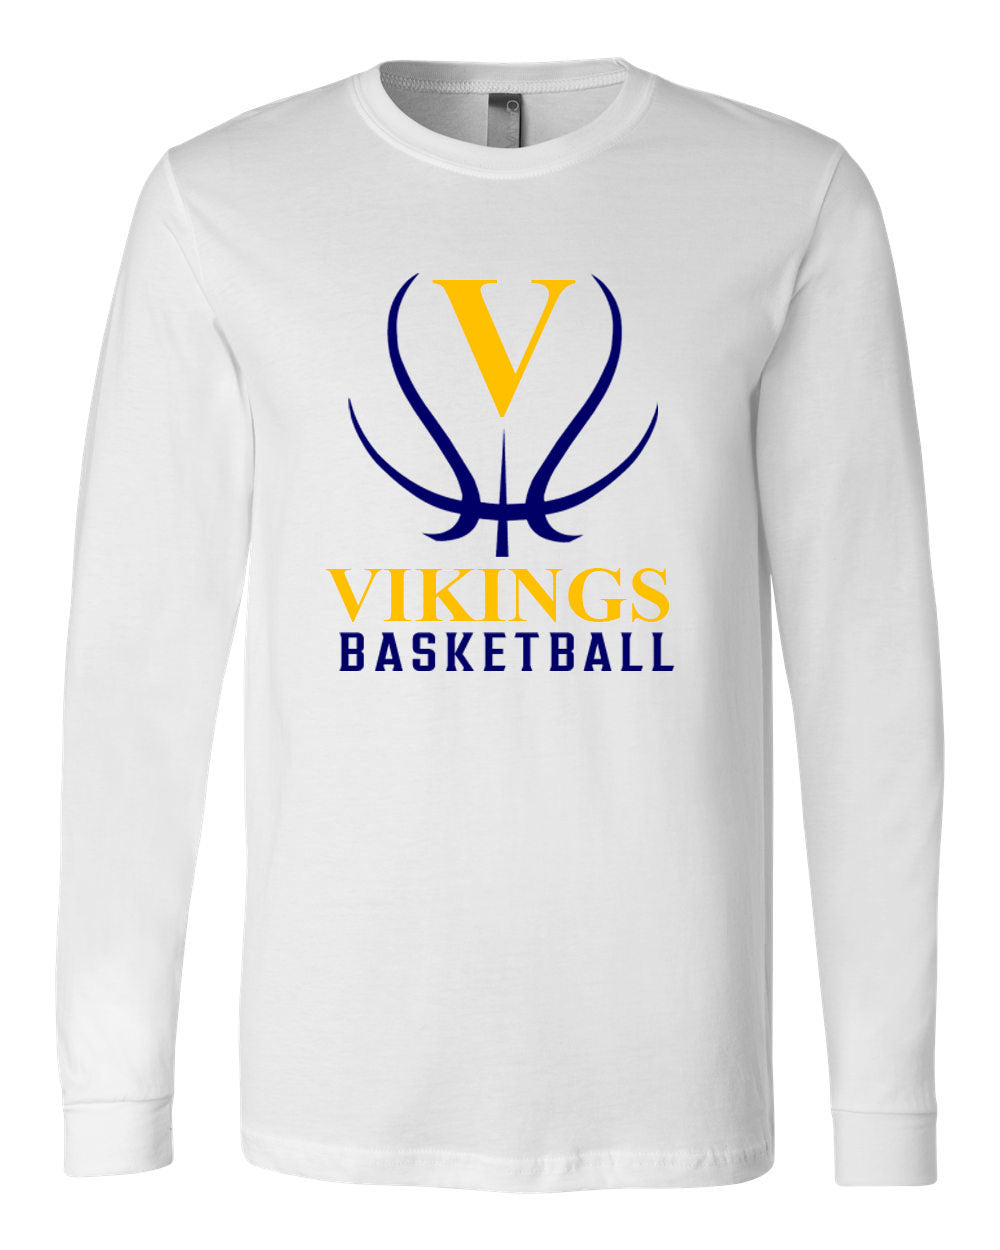 Vikings Basketball  Design 3 Long Sleeve Shirt